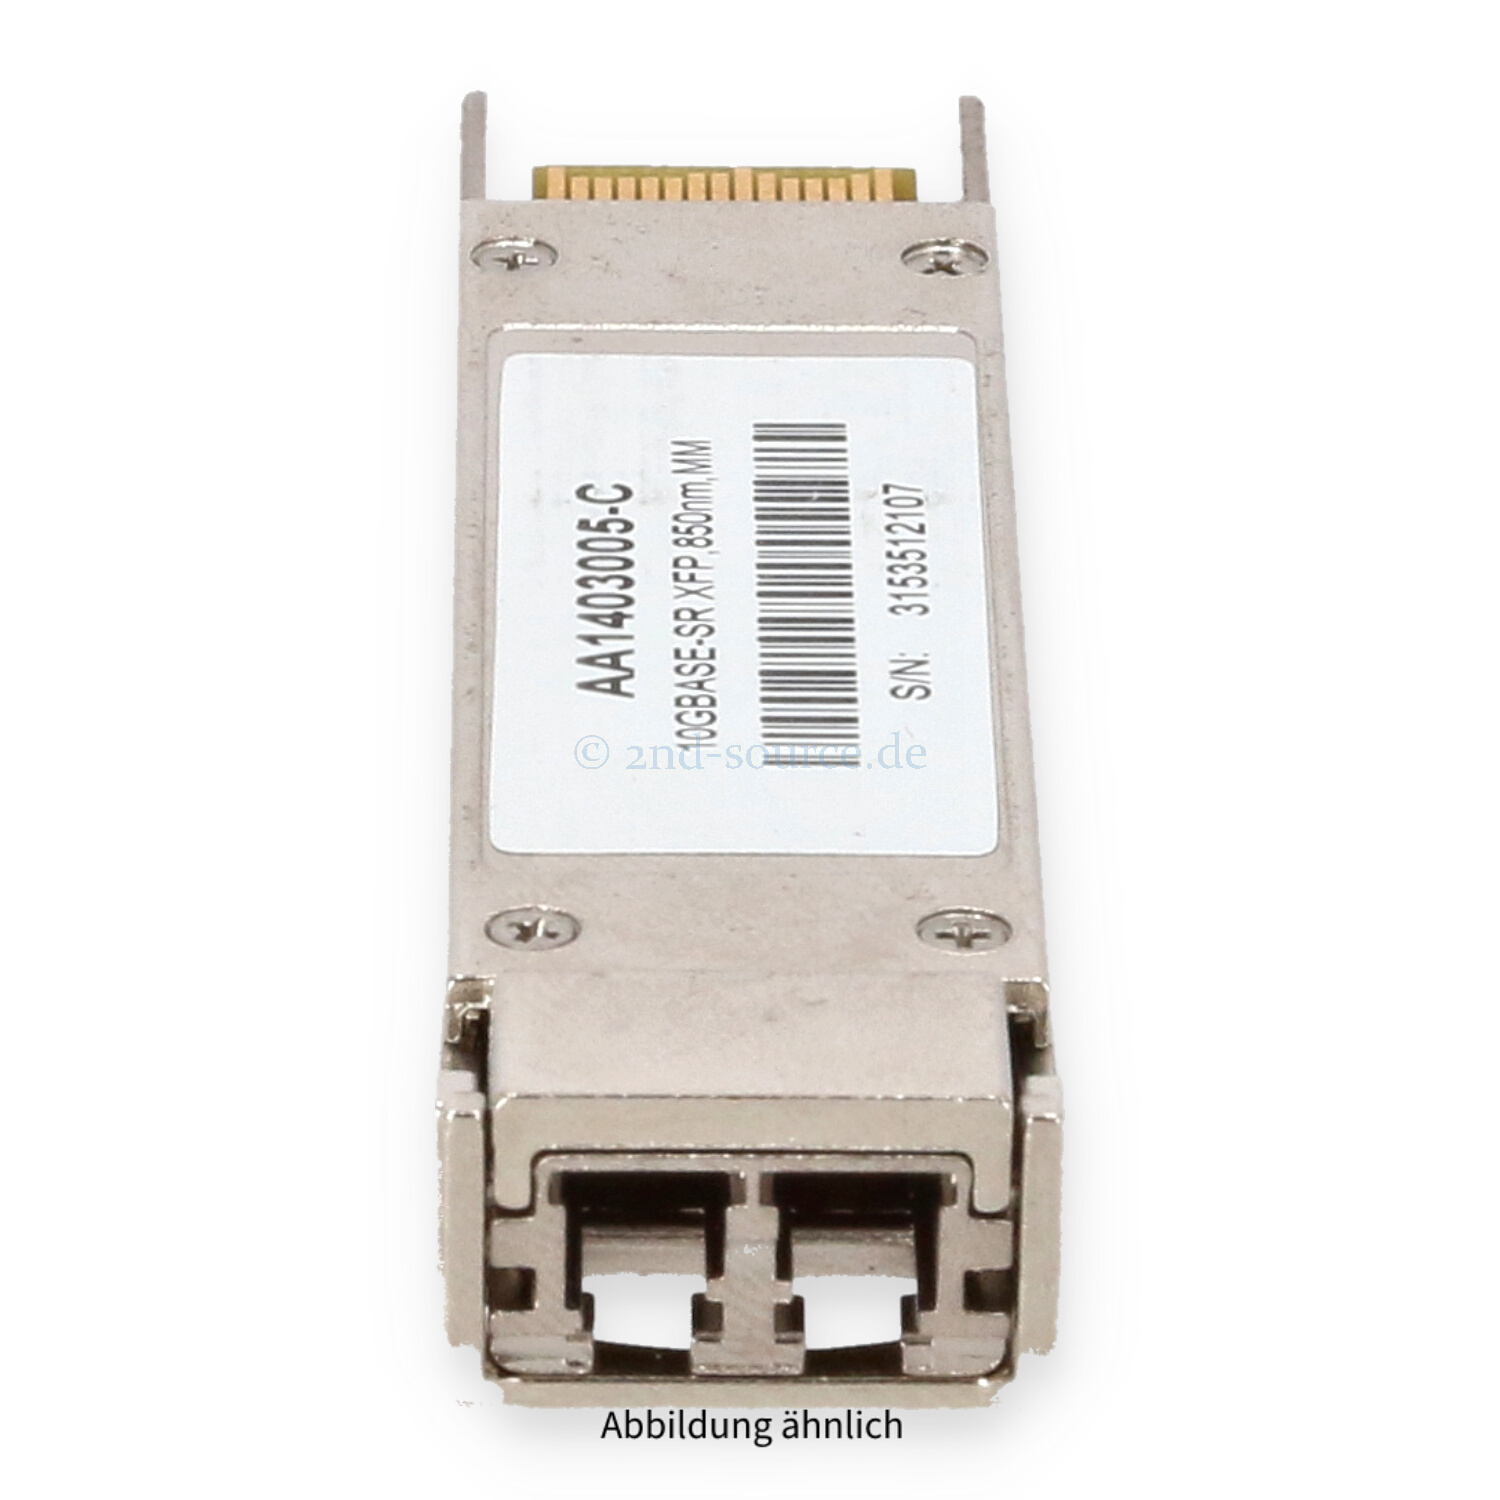 10G SR/SW XFP LC Transceiver Module kompatibel zu AA1403005-E5